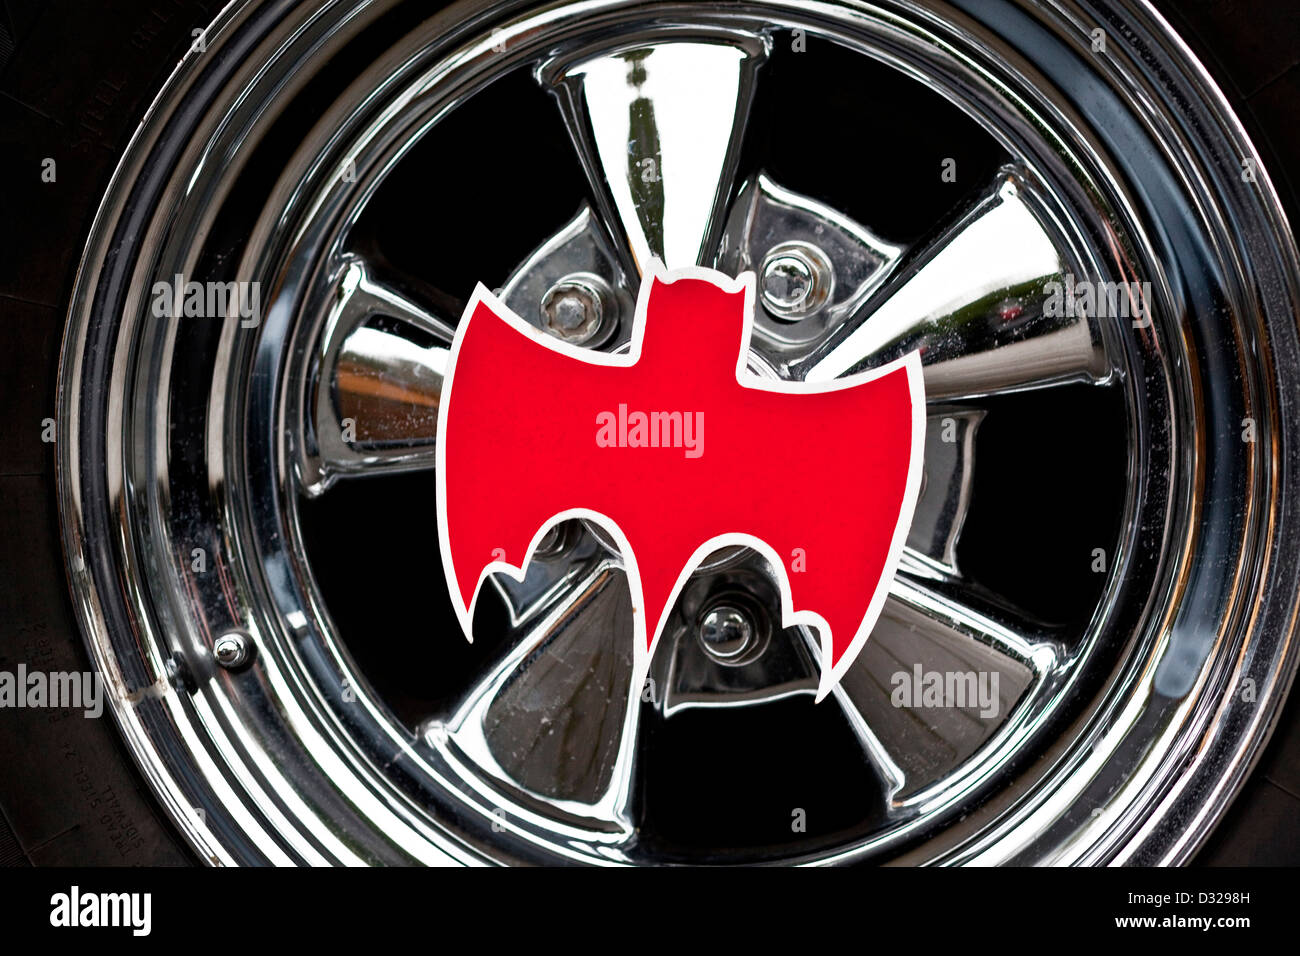 Wheel hub with red logo, Batmobile vehicle interior Stock Photo